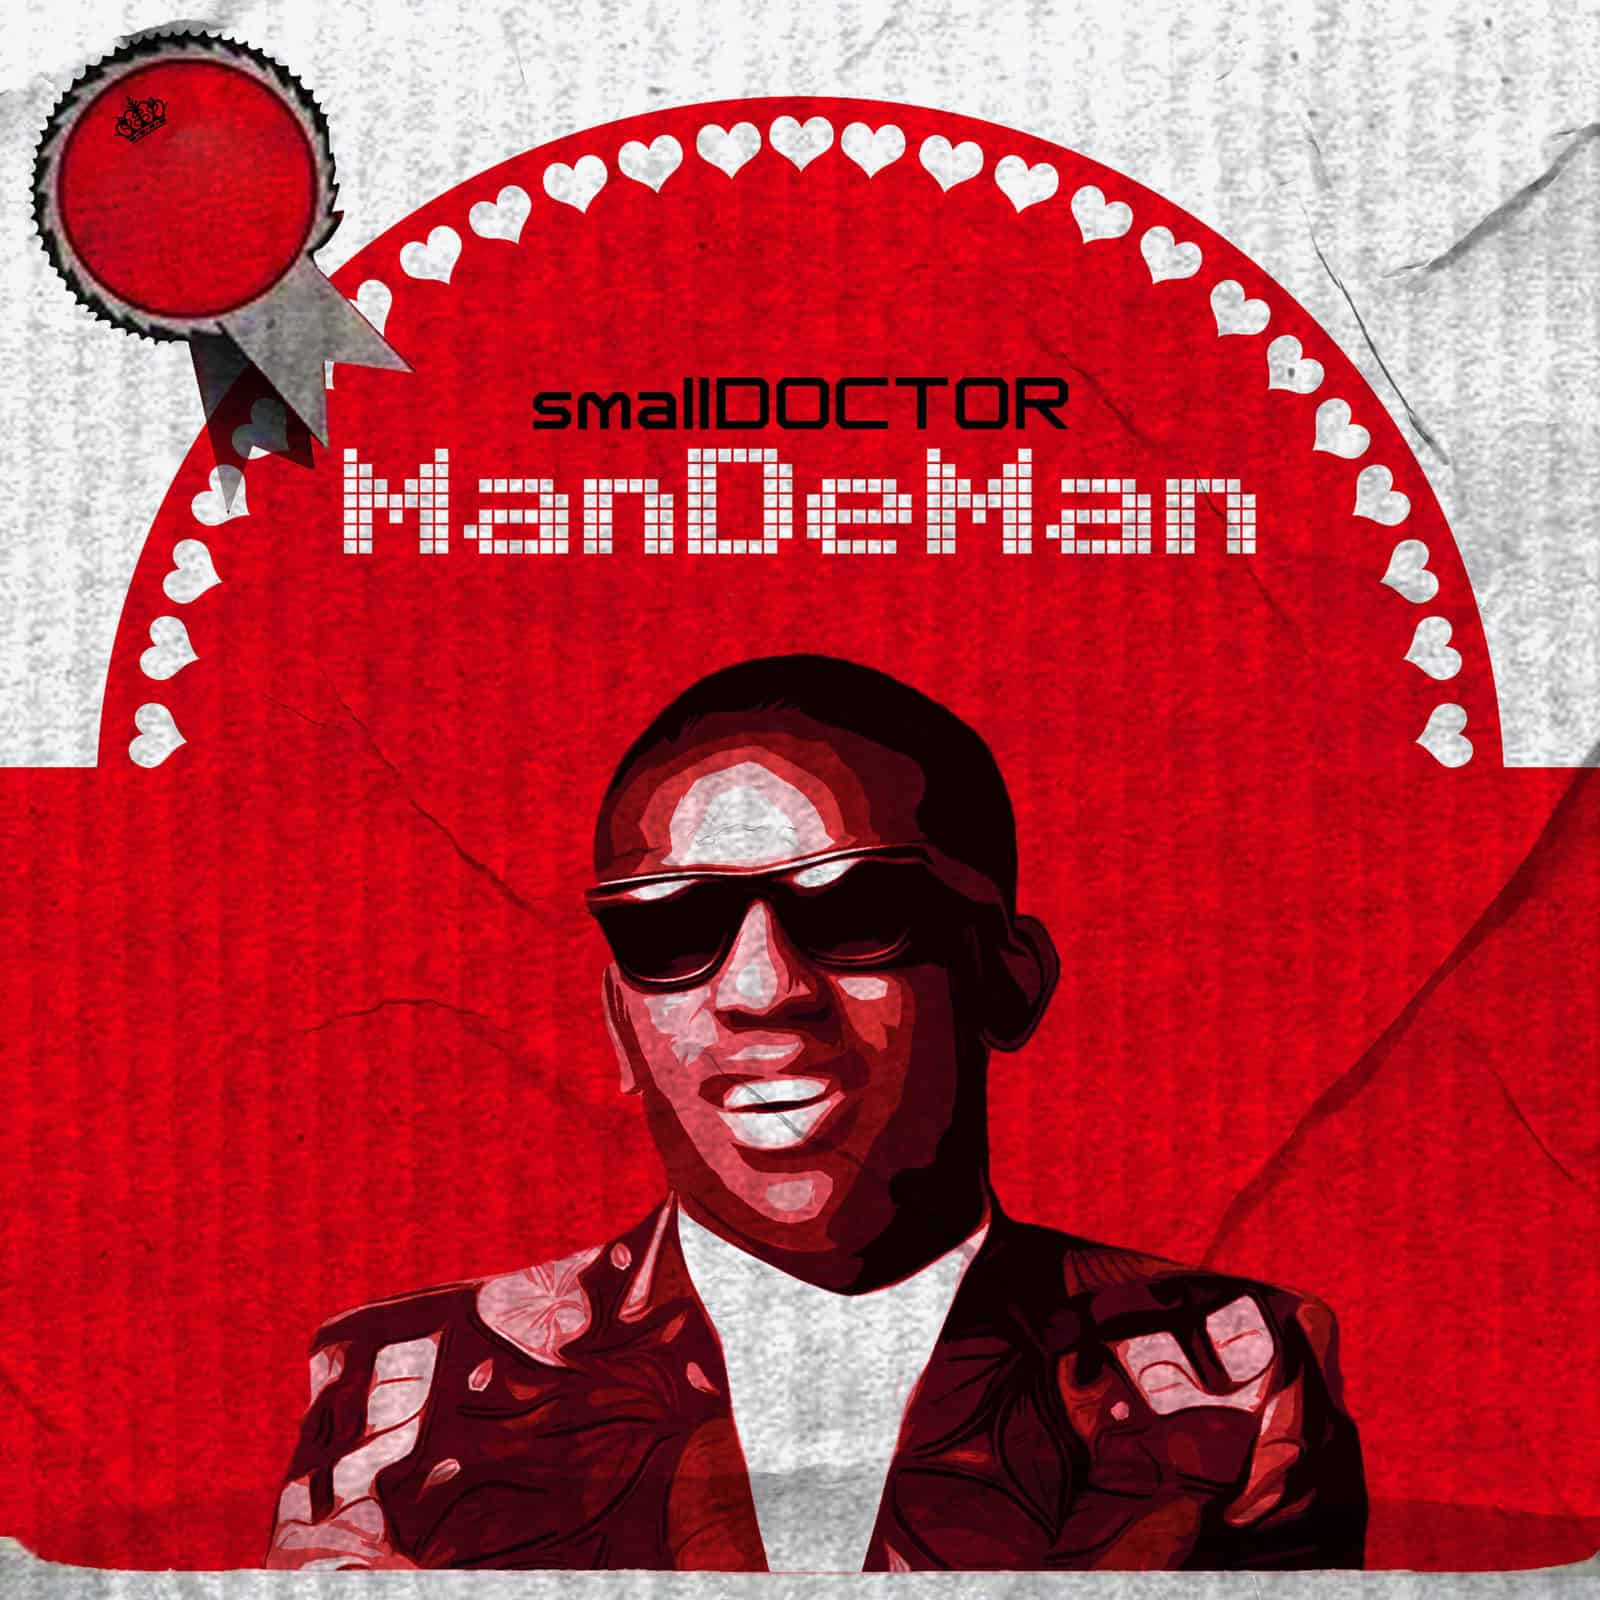 Small Doctor - Mandeman